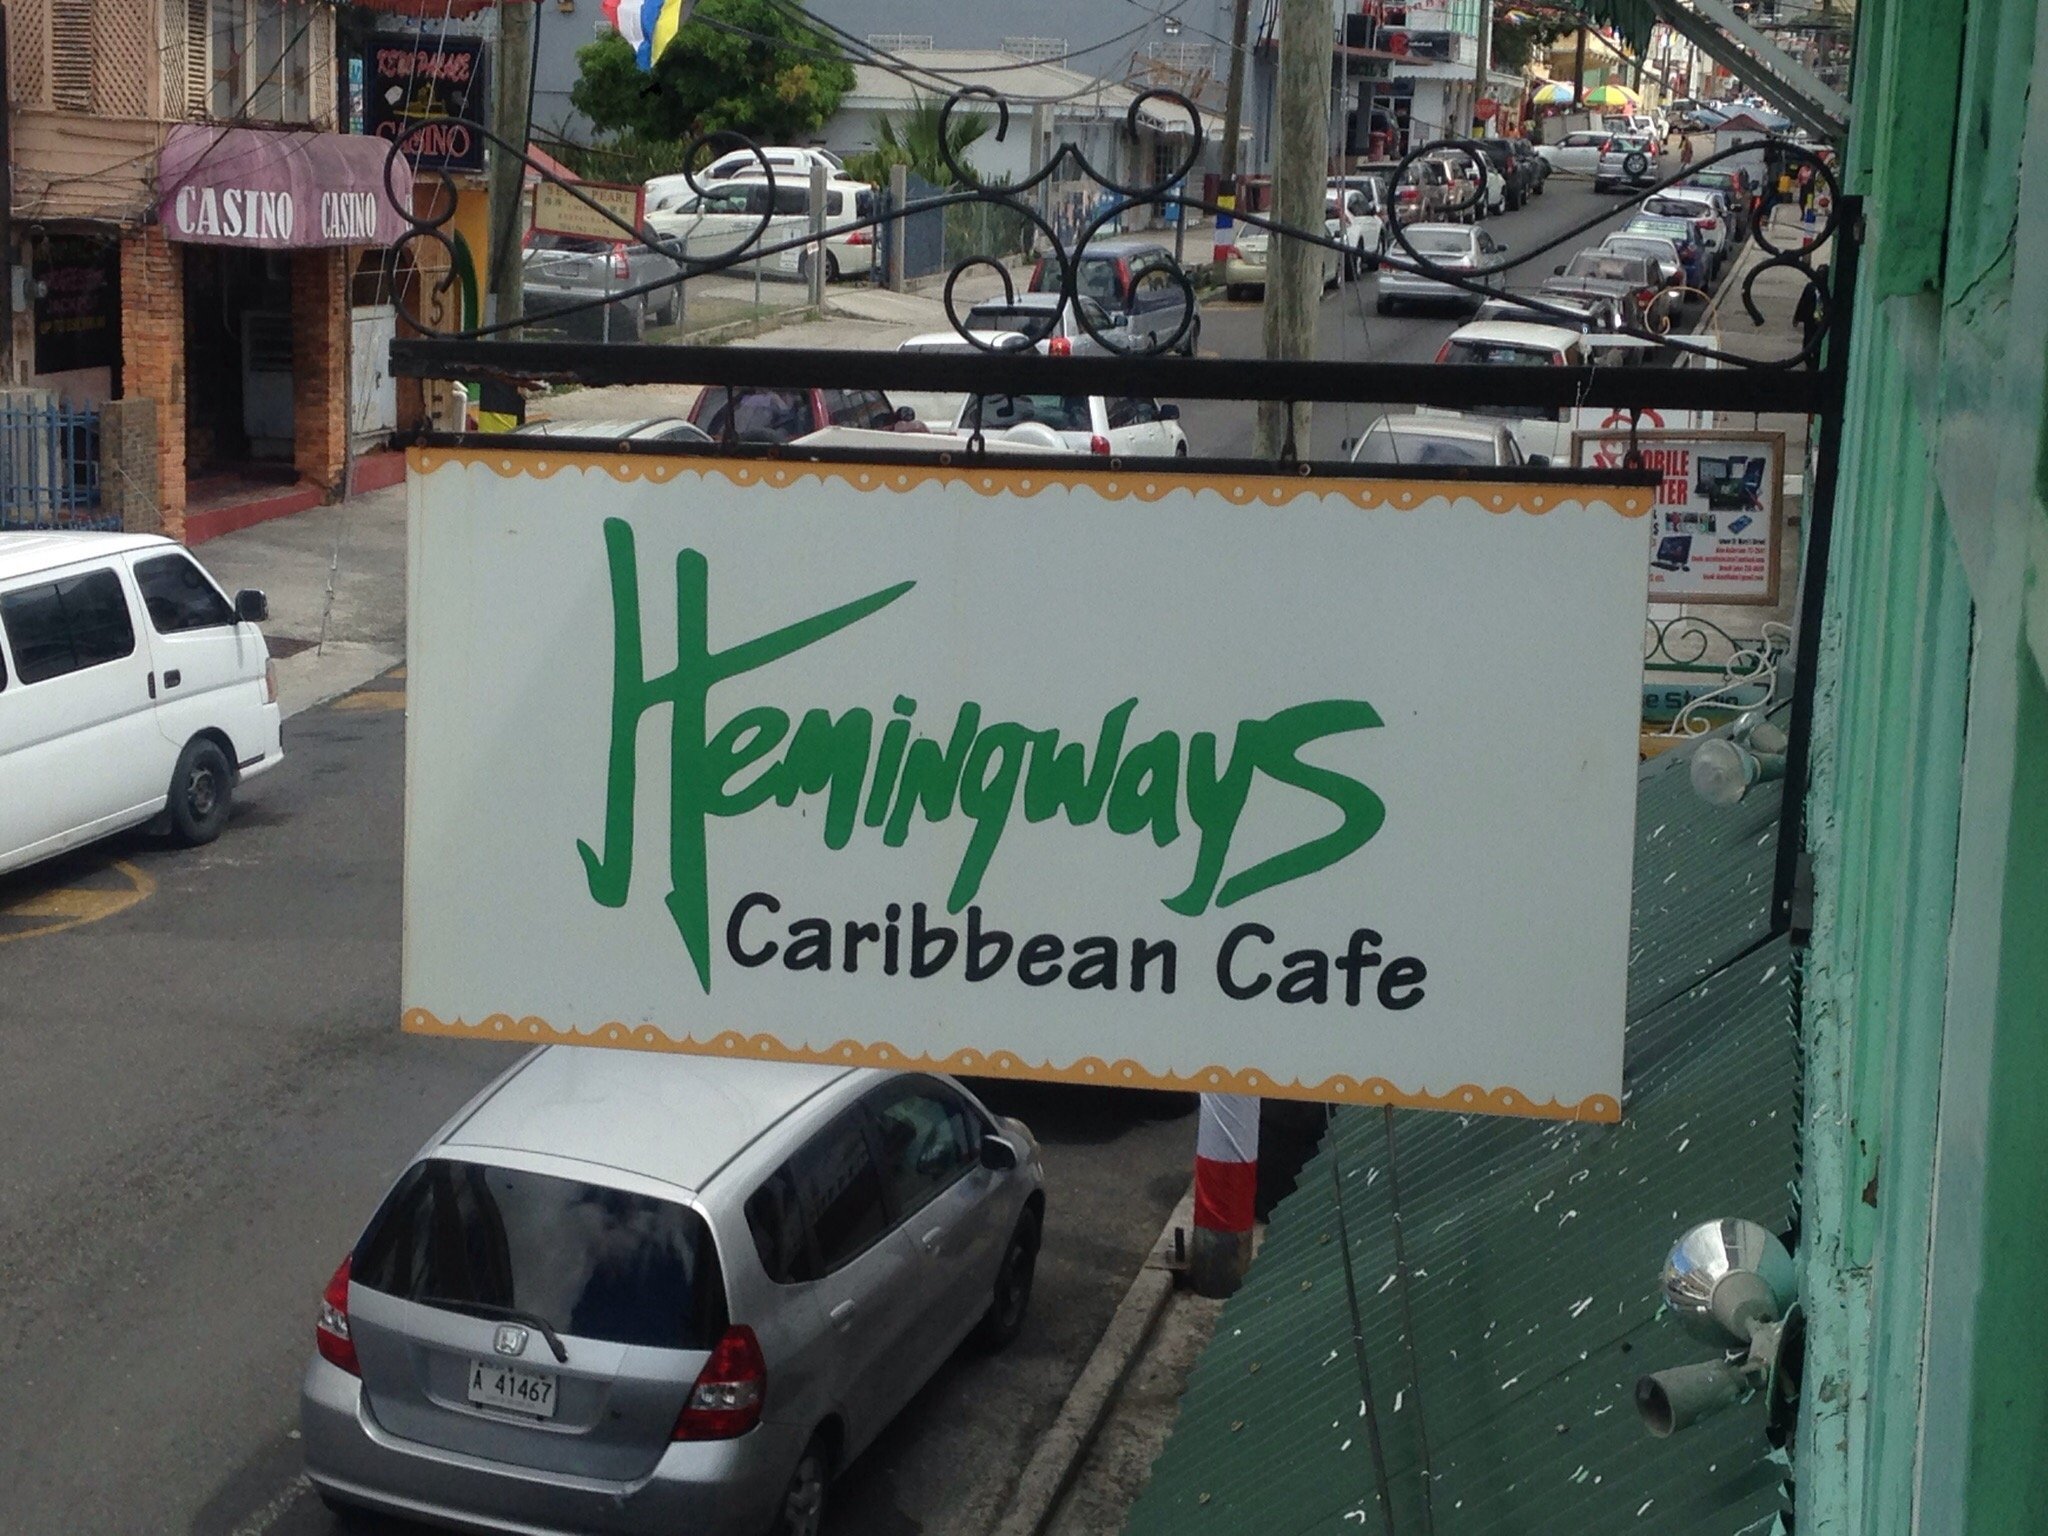 Hemmingway's Caribbean Cafe